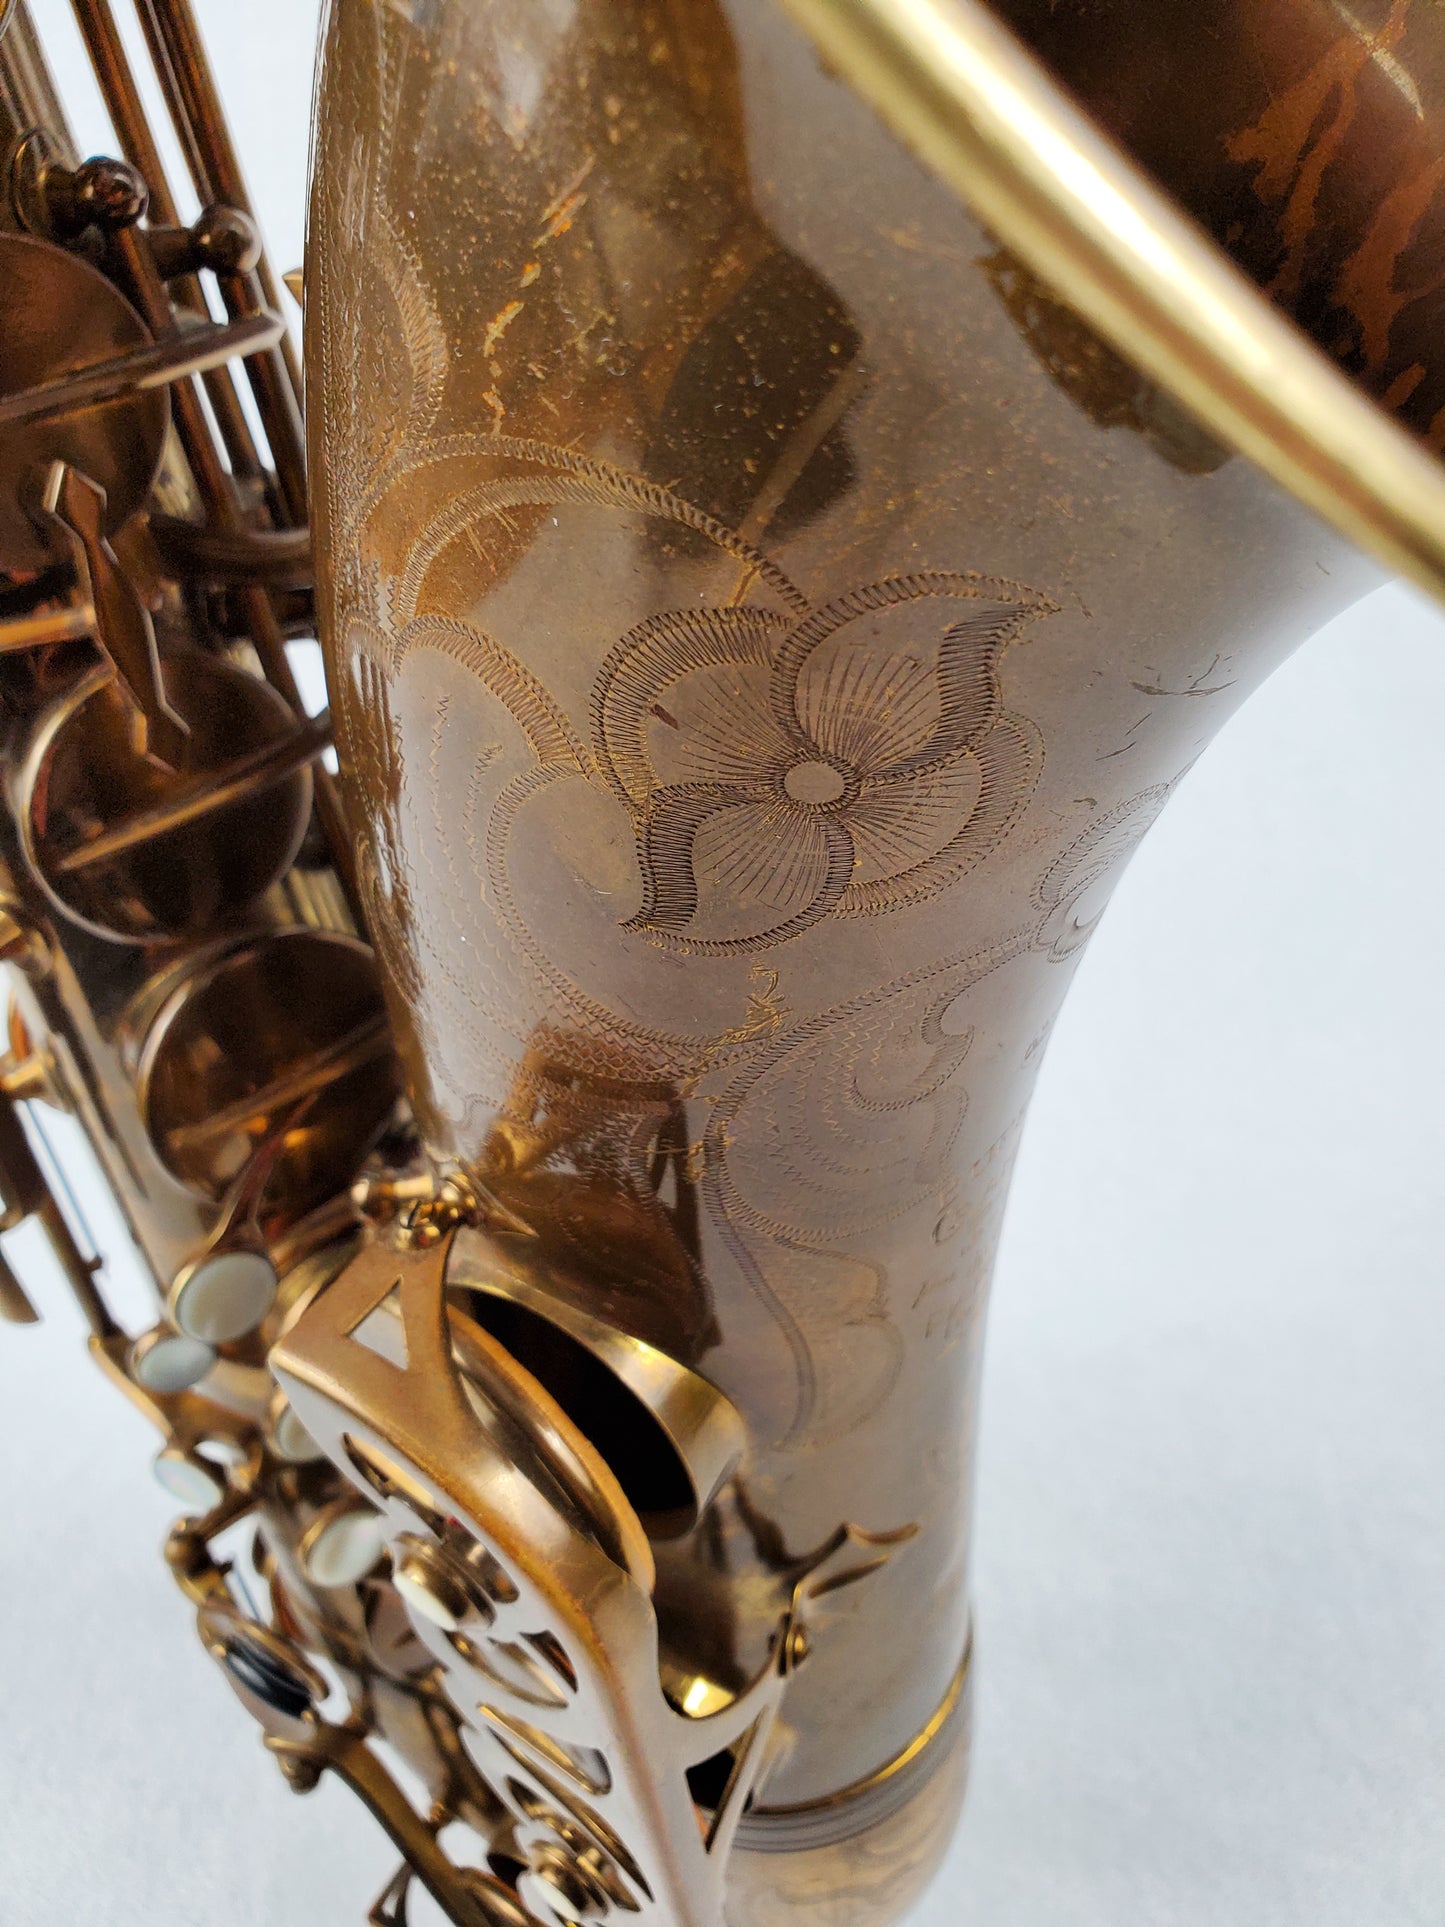 Buffet Crampon SA 18-20 Dynaction Tenor Saxophone 31xx